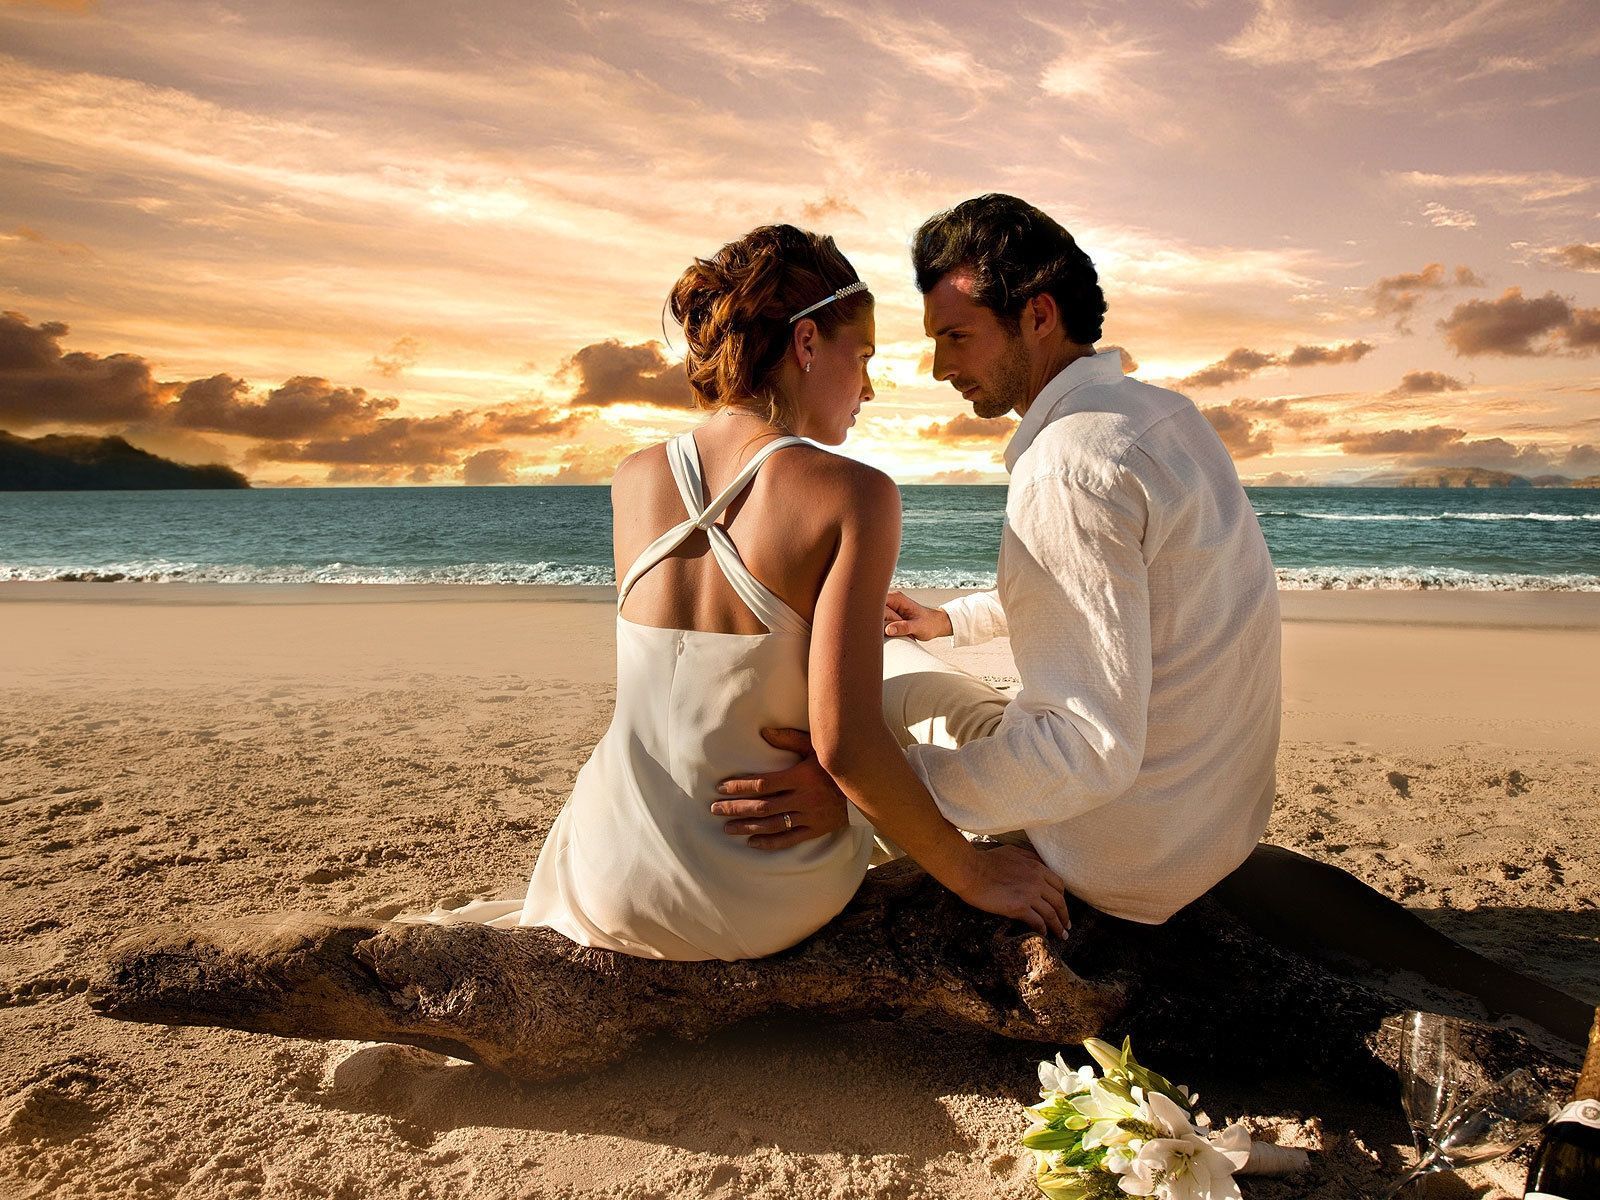 Romantic Love Couple HD Wallpaper. Love couple wallpaper, Romantic beach wedding, Beach wedding photo